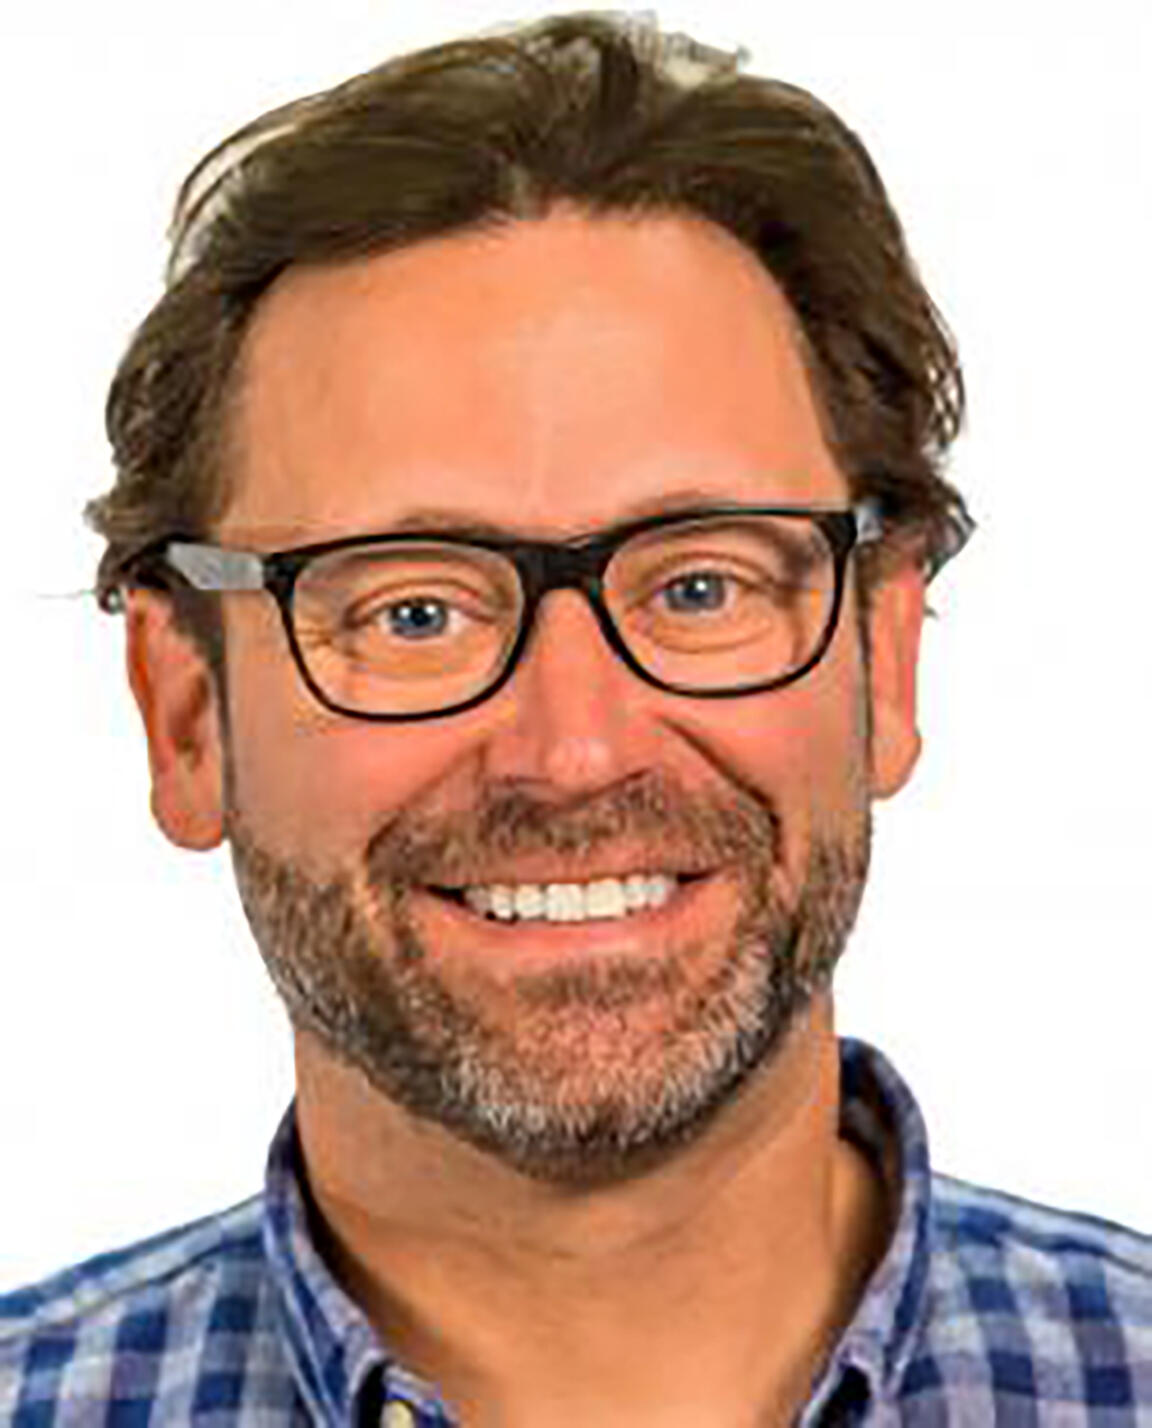 Sean Gailmard wearing glasses and smiling ub a blue plaid buttondown against a white background